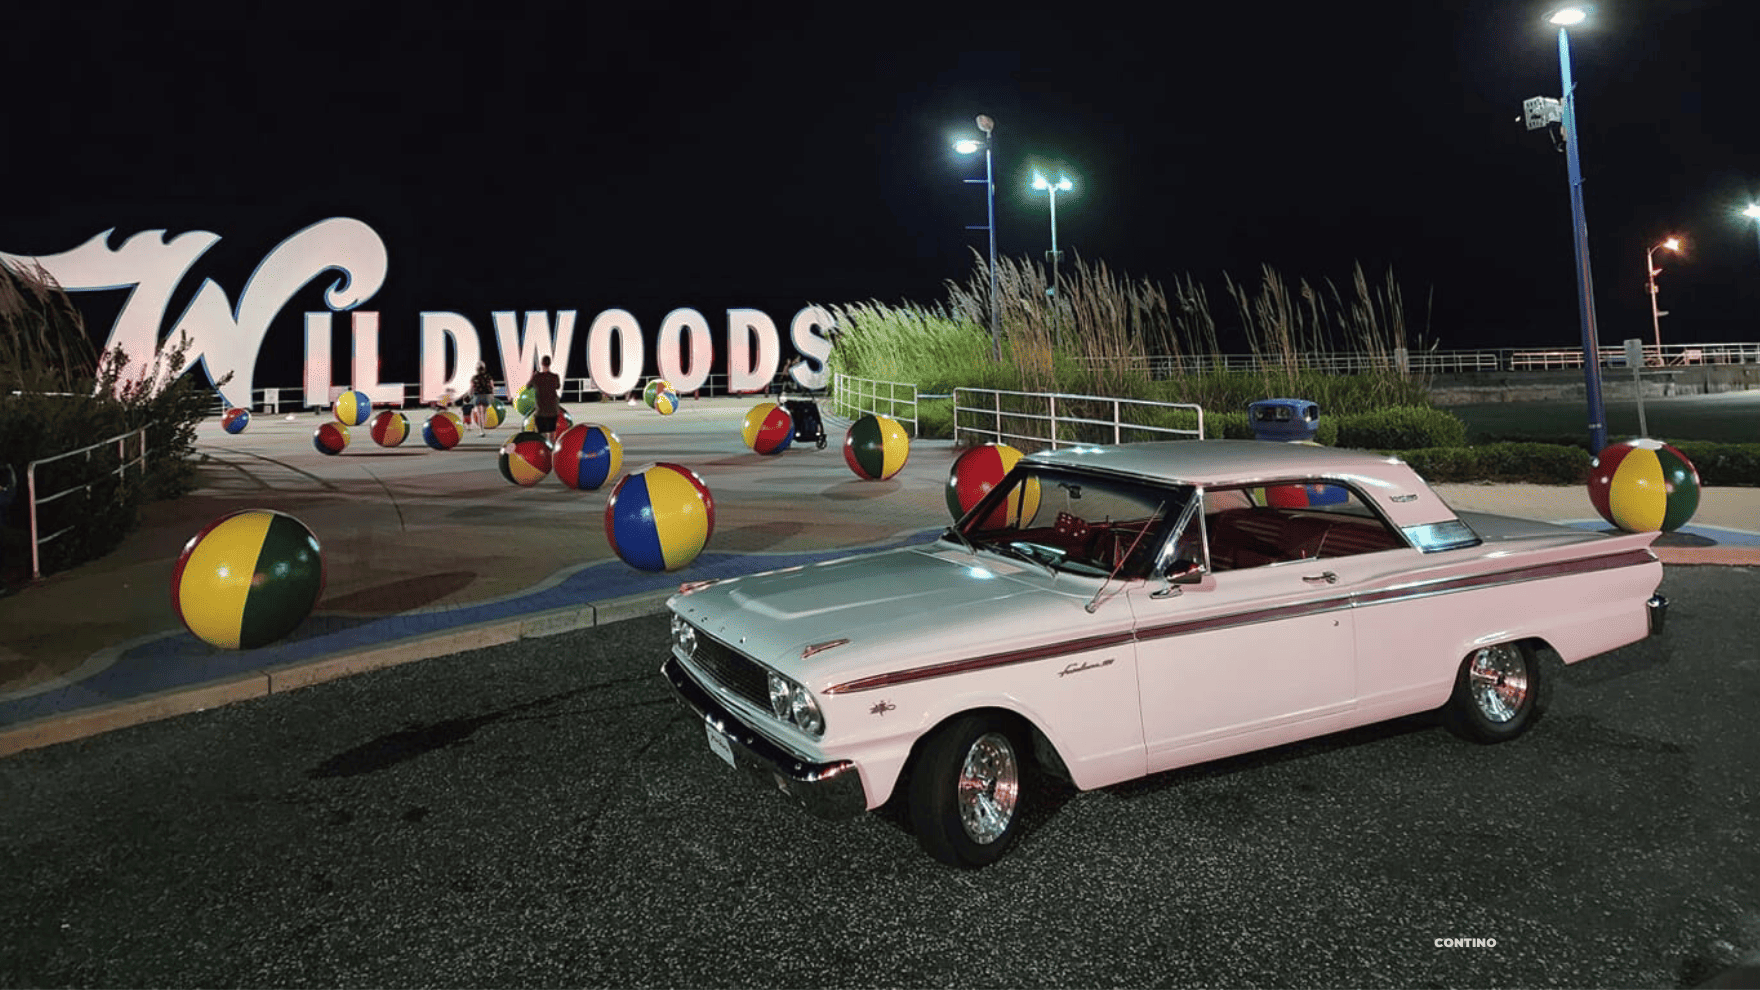 Fall Wildwood Classic Car Show Returning to the Wildwood Boardwalk